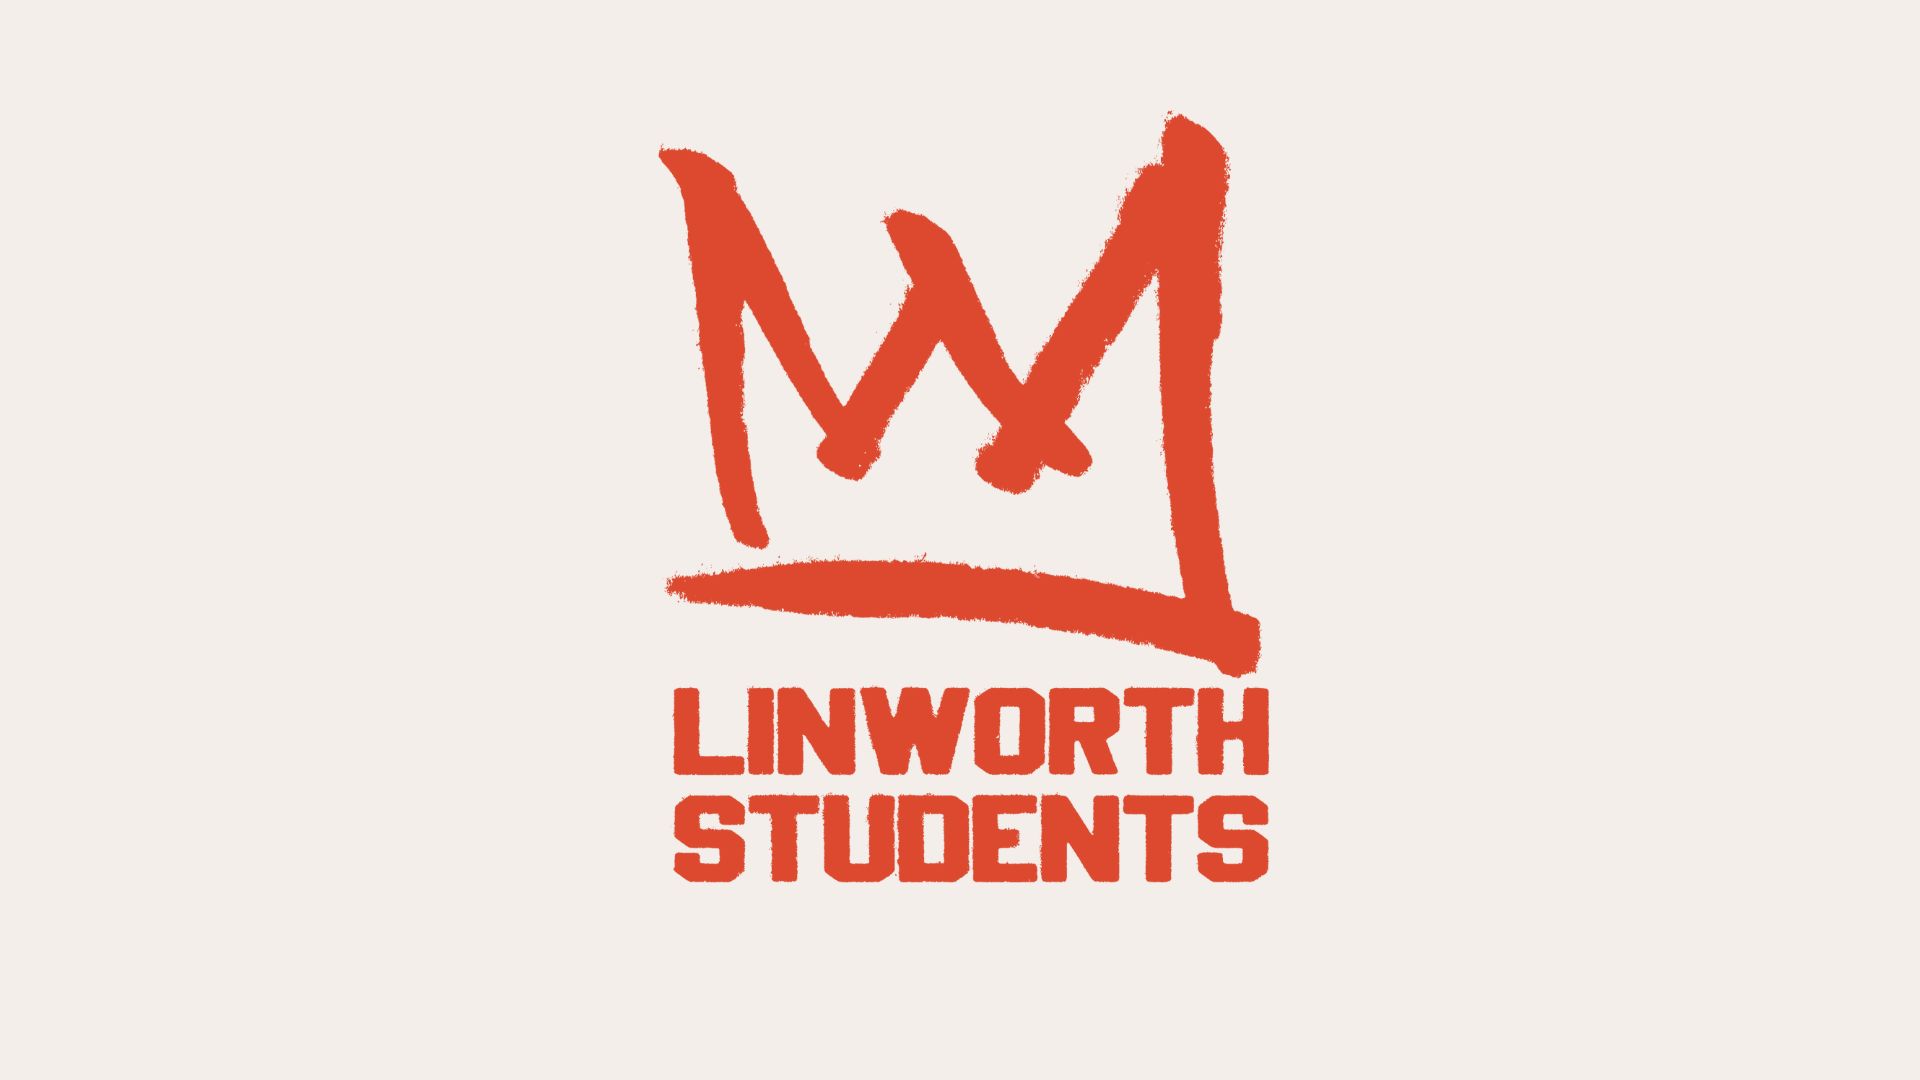 Linworth Students 1920x1080 image